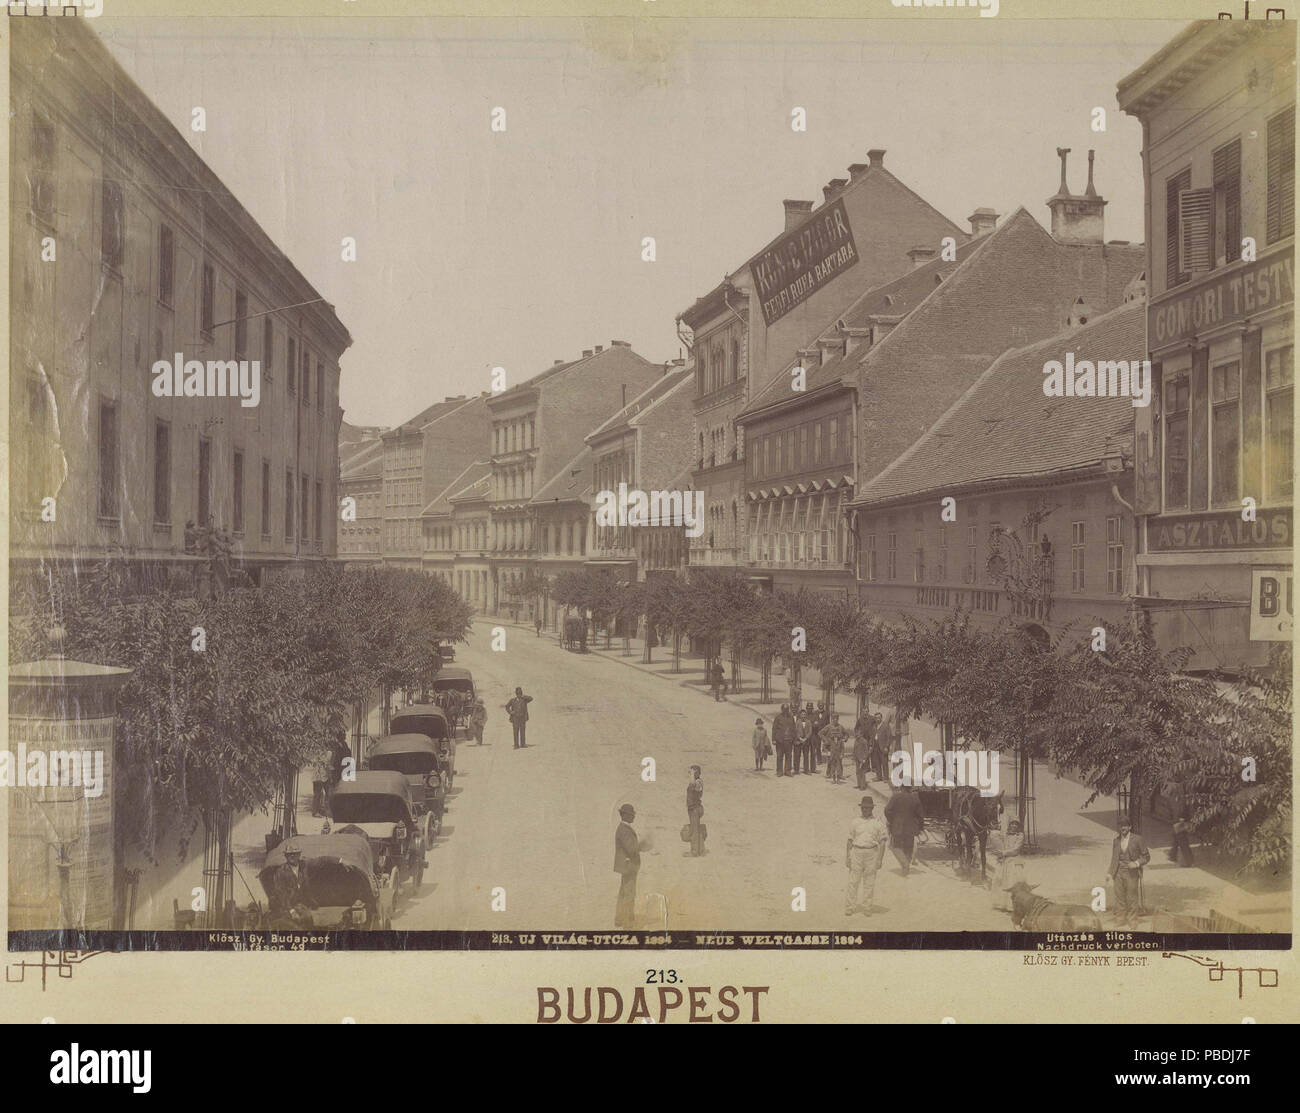 Kossuth lajos utca hi-res stock photography and images - Page 2 - Alamy